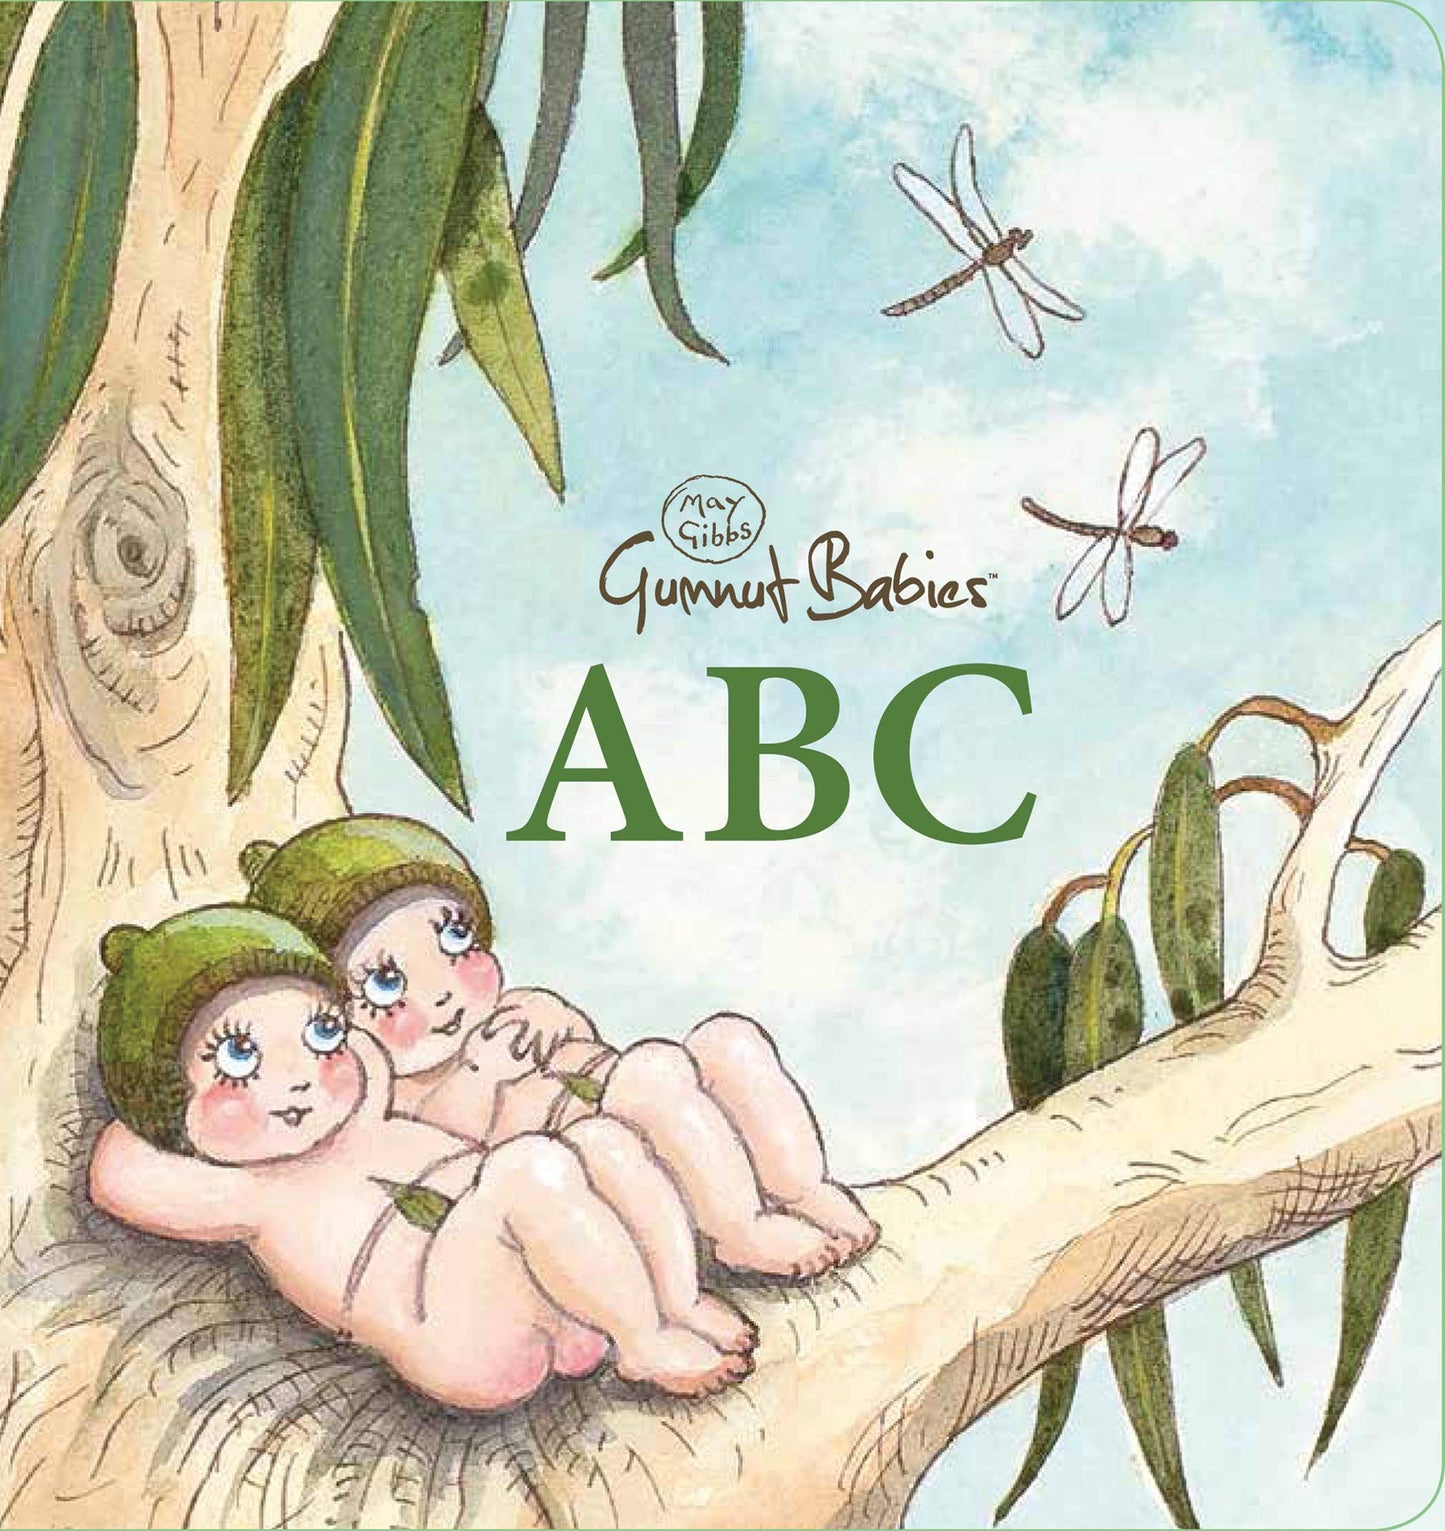 GUMNUT BABIES: ABC